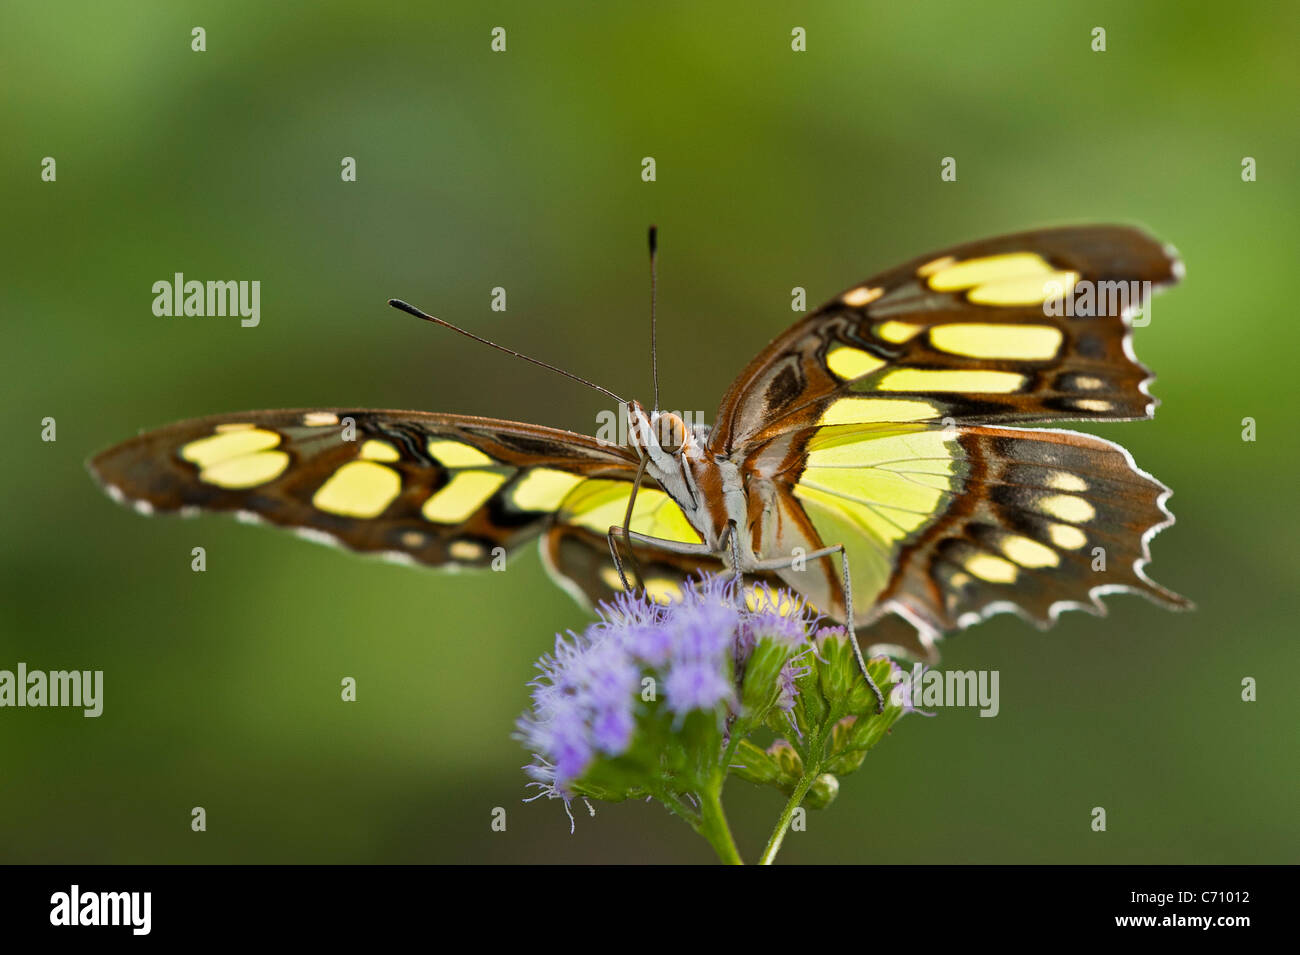 A Malachite butterfly feeding Stock Photo